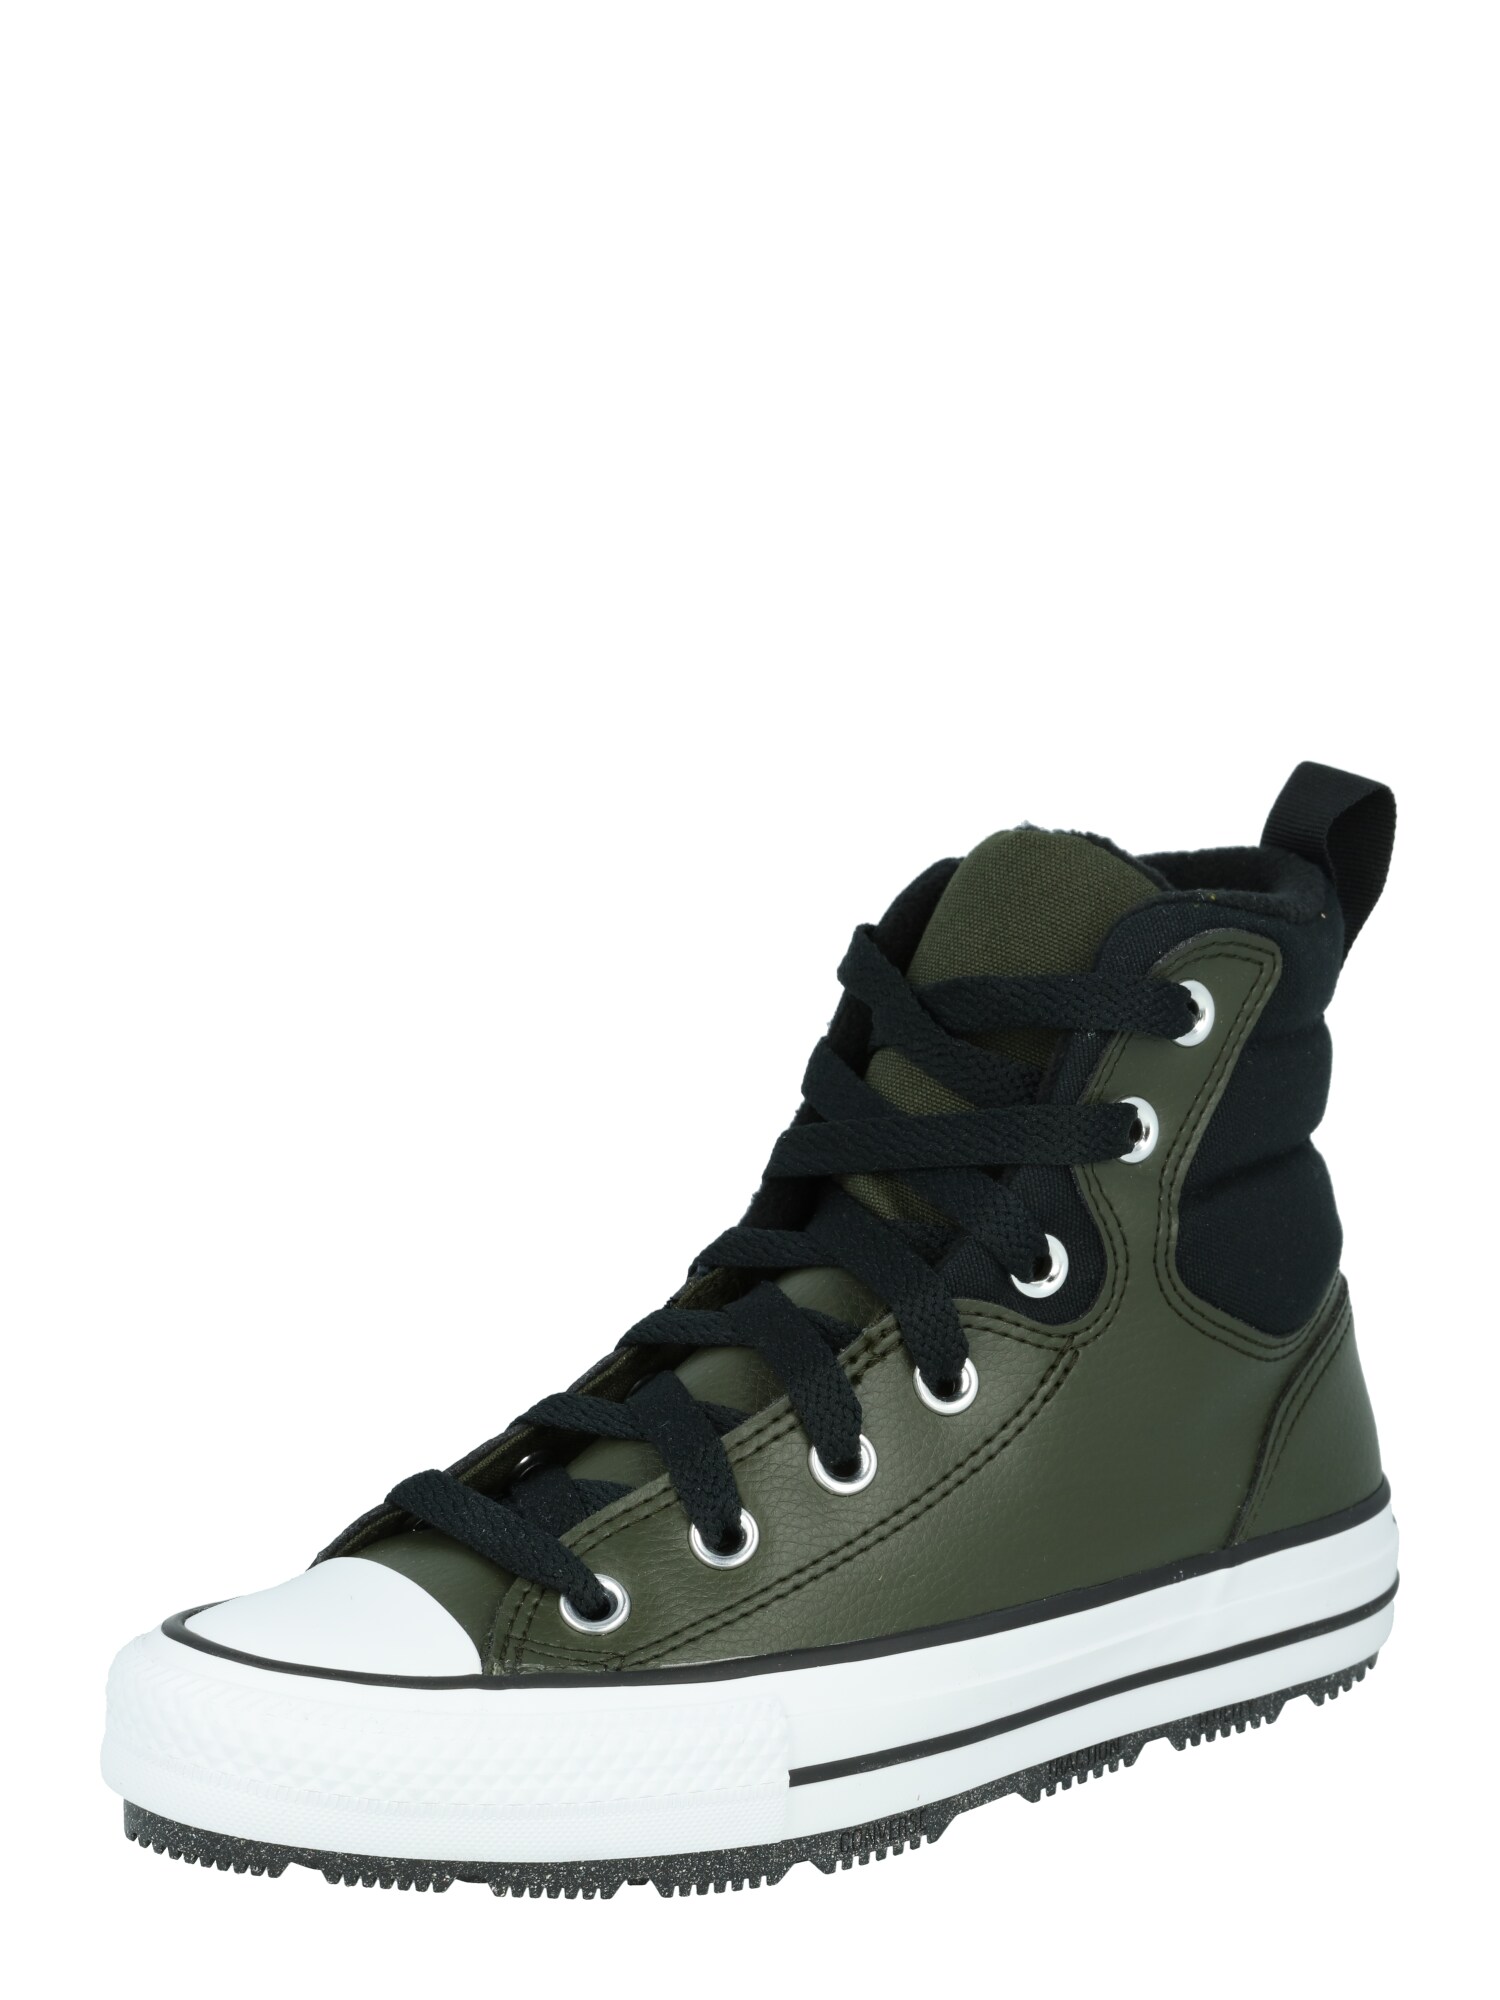 Converse CONVERSE Sneaker 'Chuck Taylor All Star' khaki / weiß